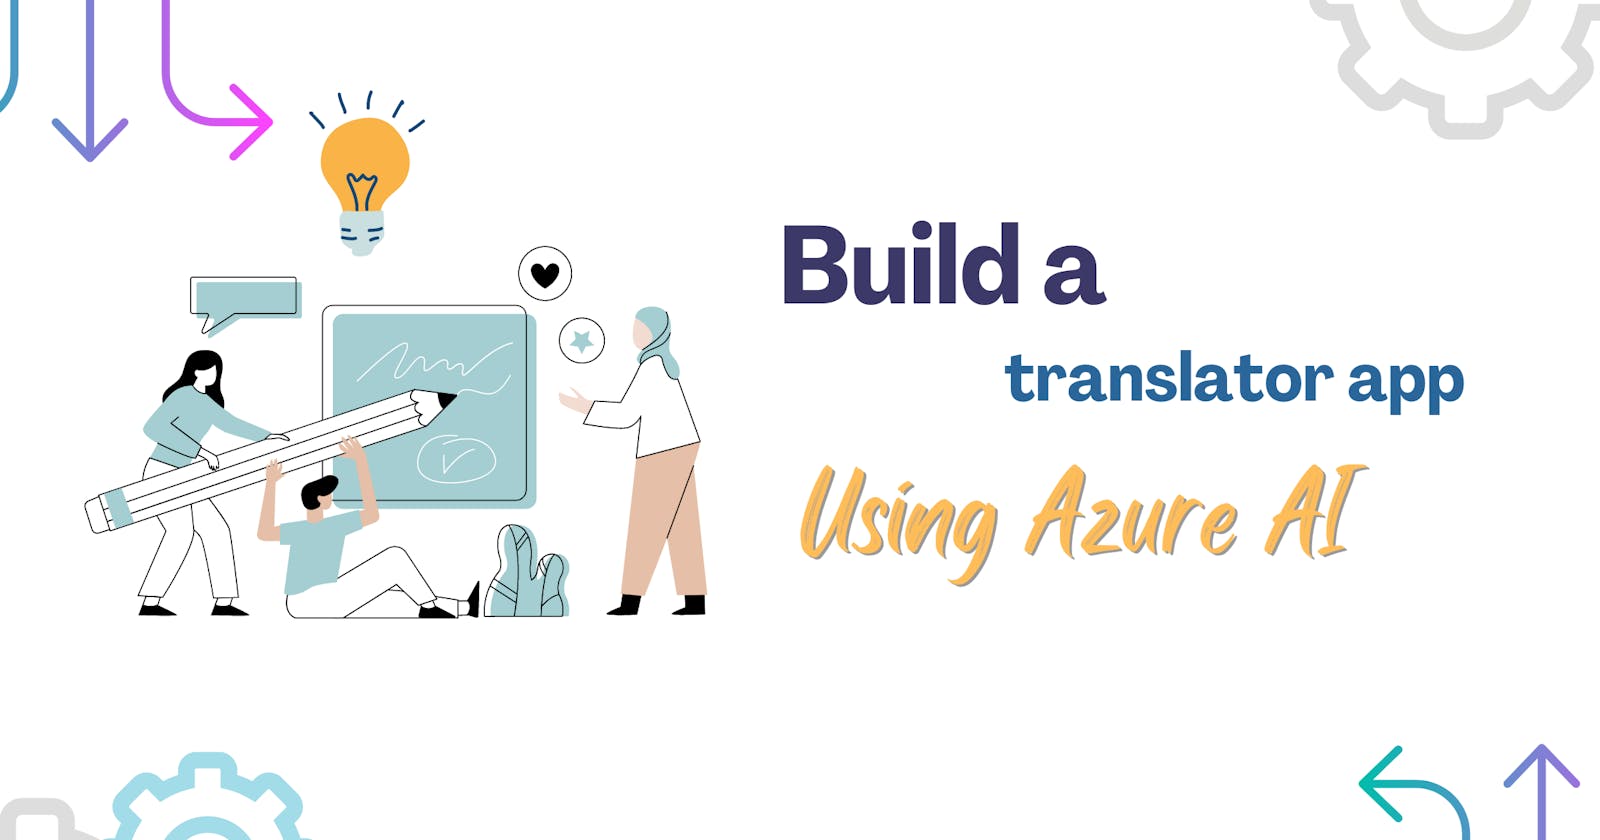 Build a translator app using Azure AI